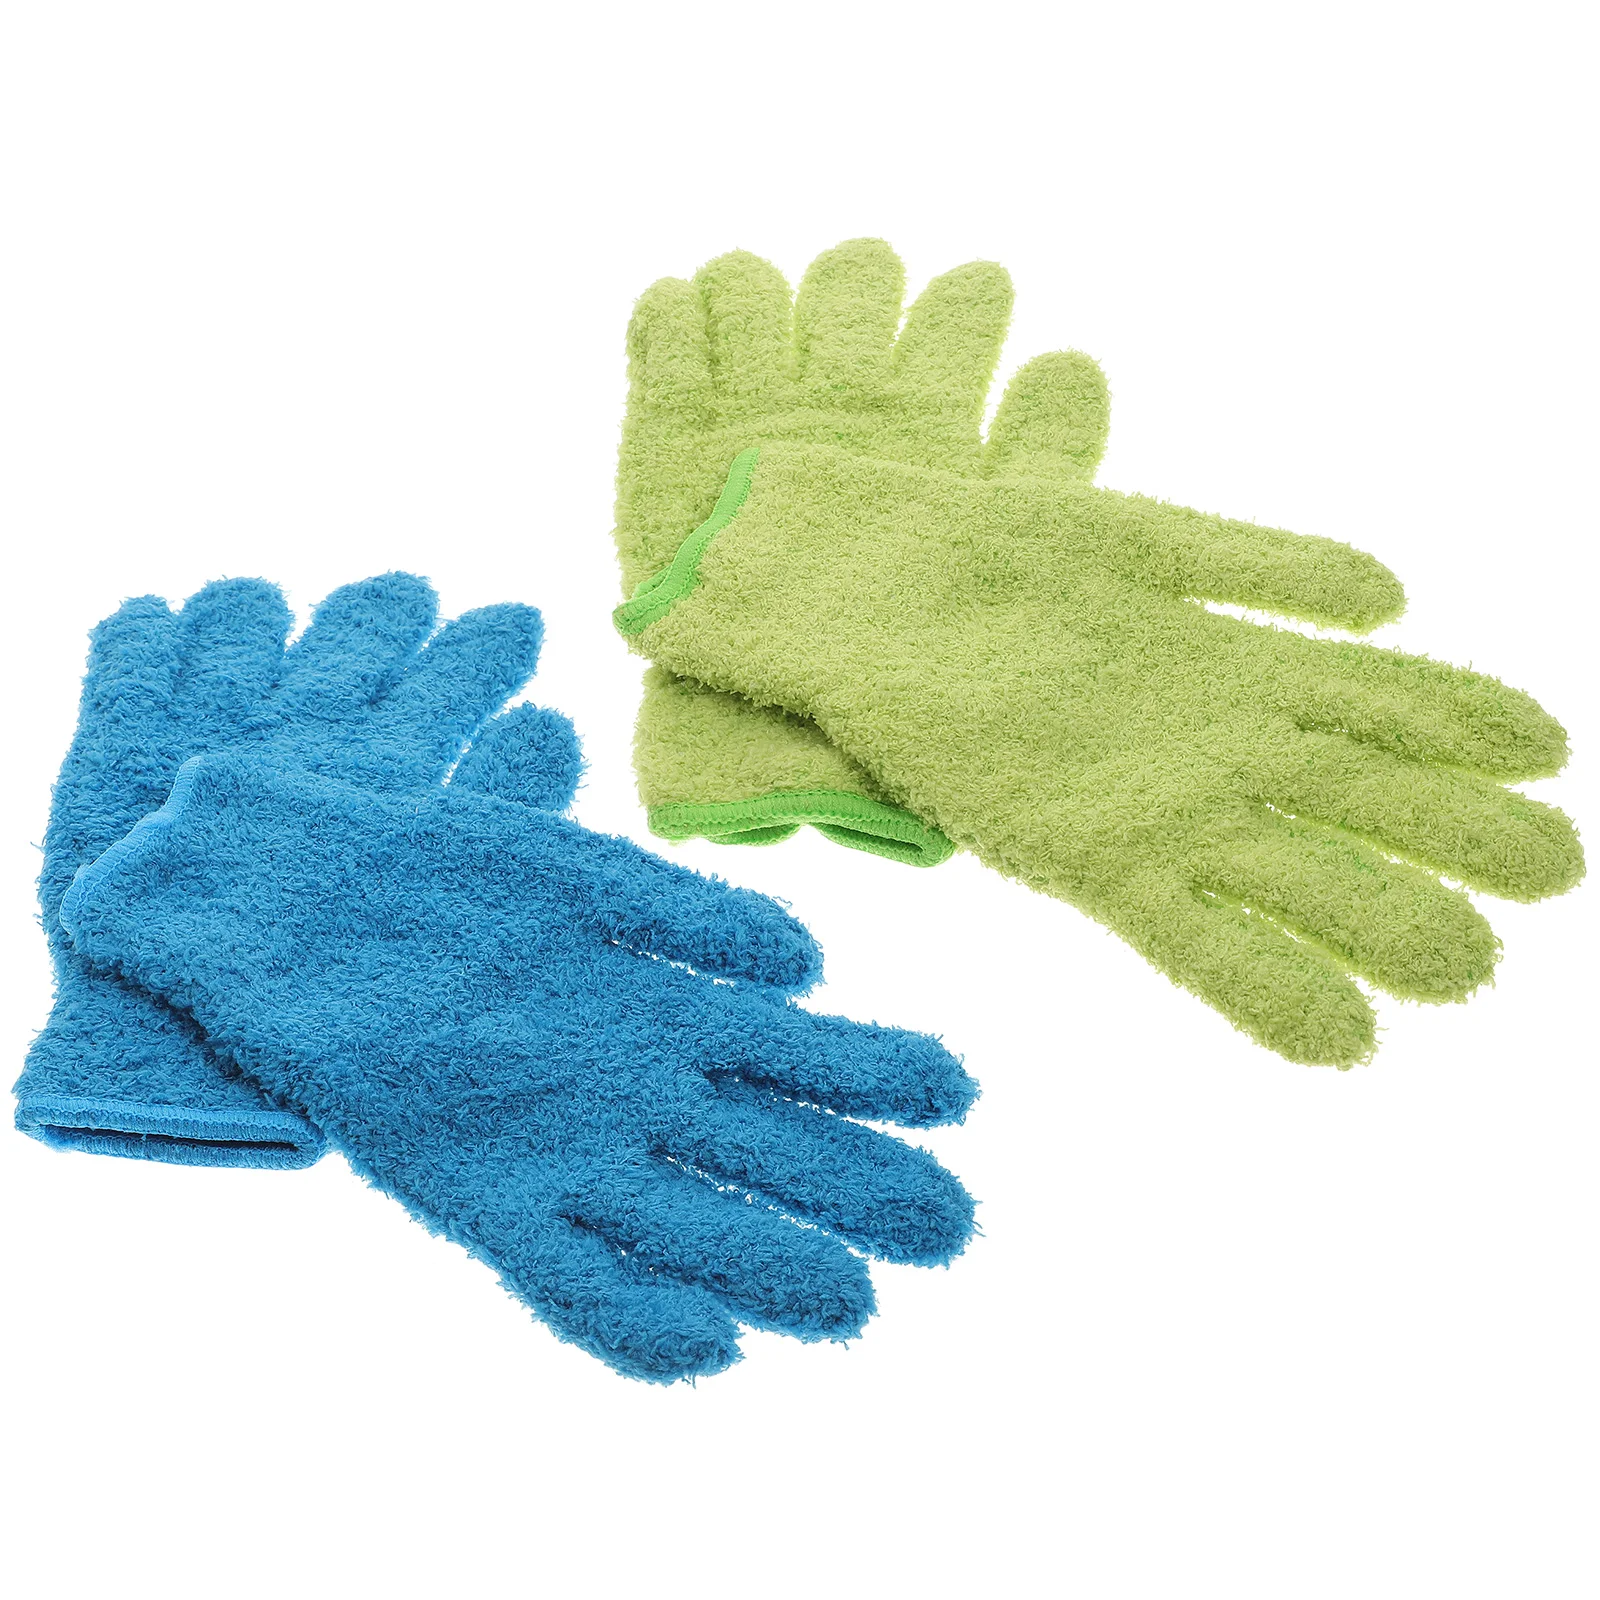 

Gloves Dusting Cleaningglove Microfiber Wipesmedium Housemitt Auto Coral Fleece Green Clean